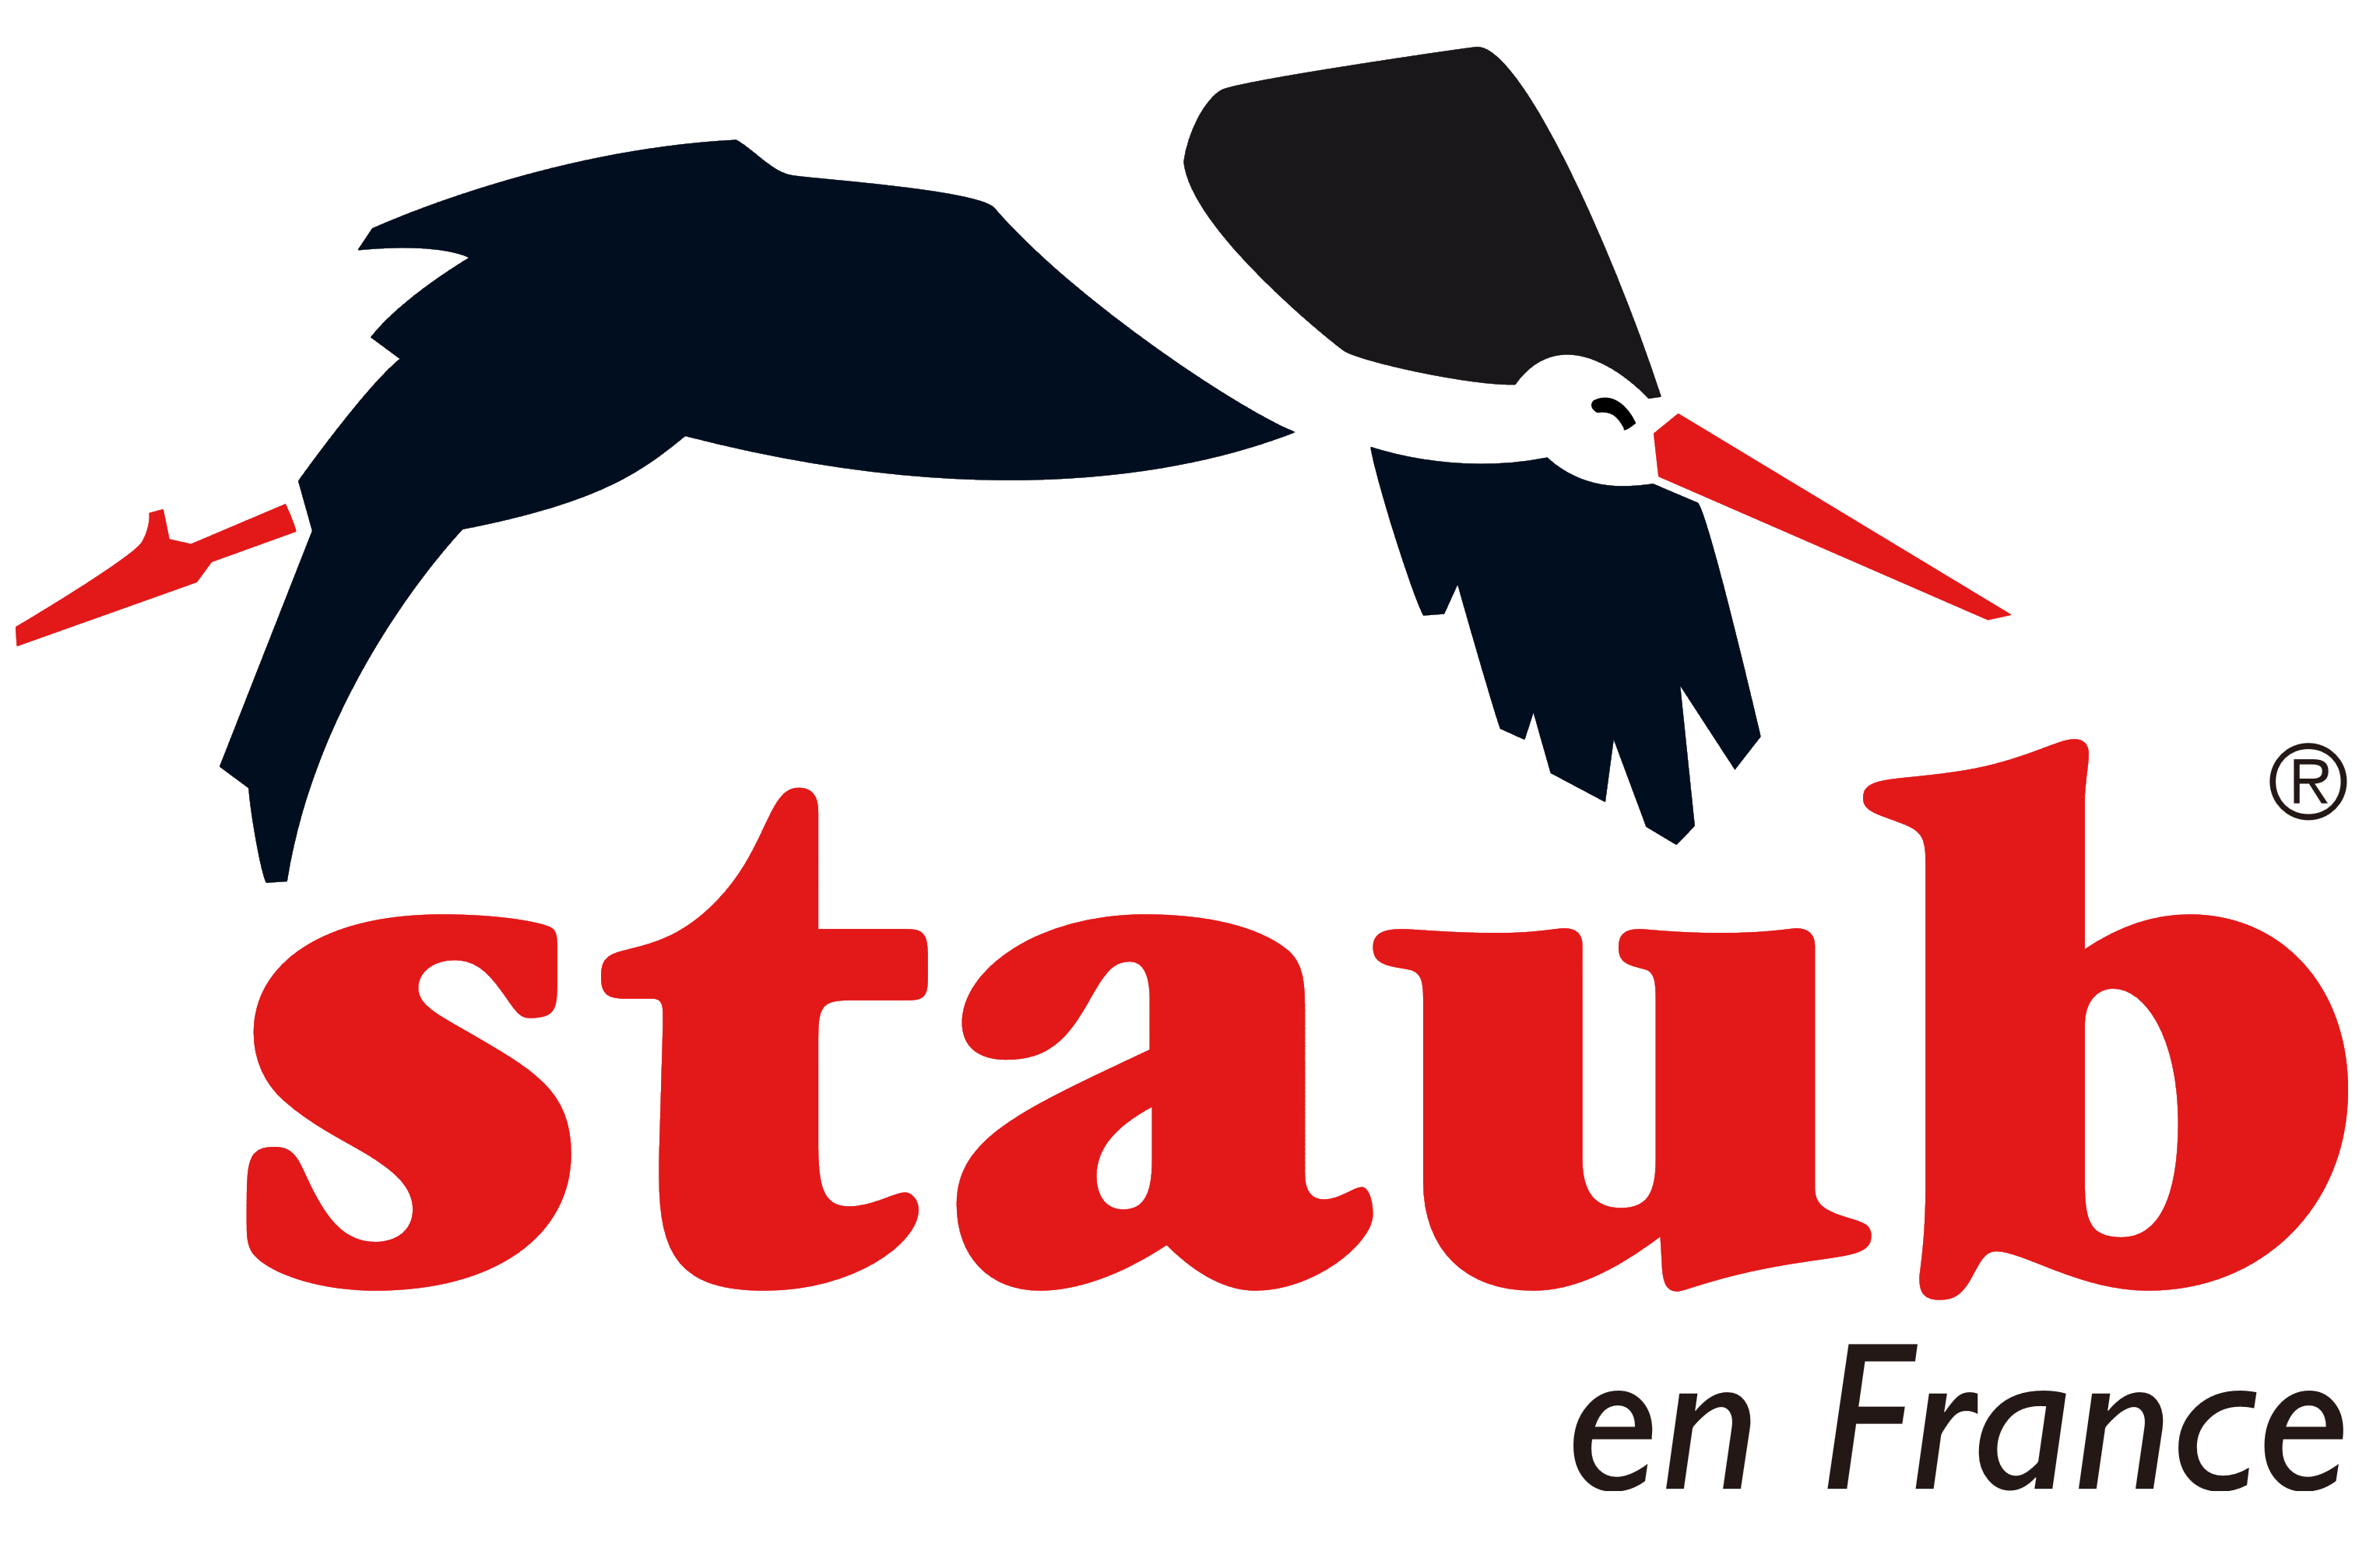 Staub logo, logotype